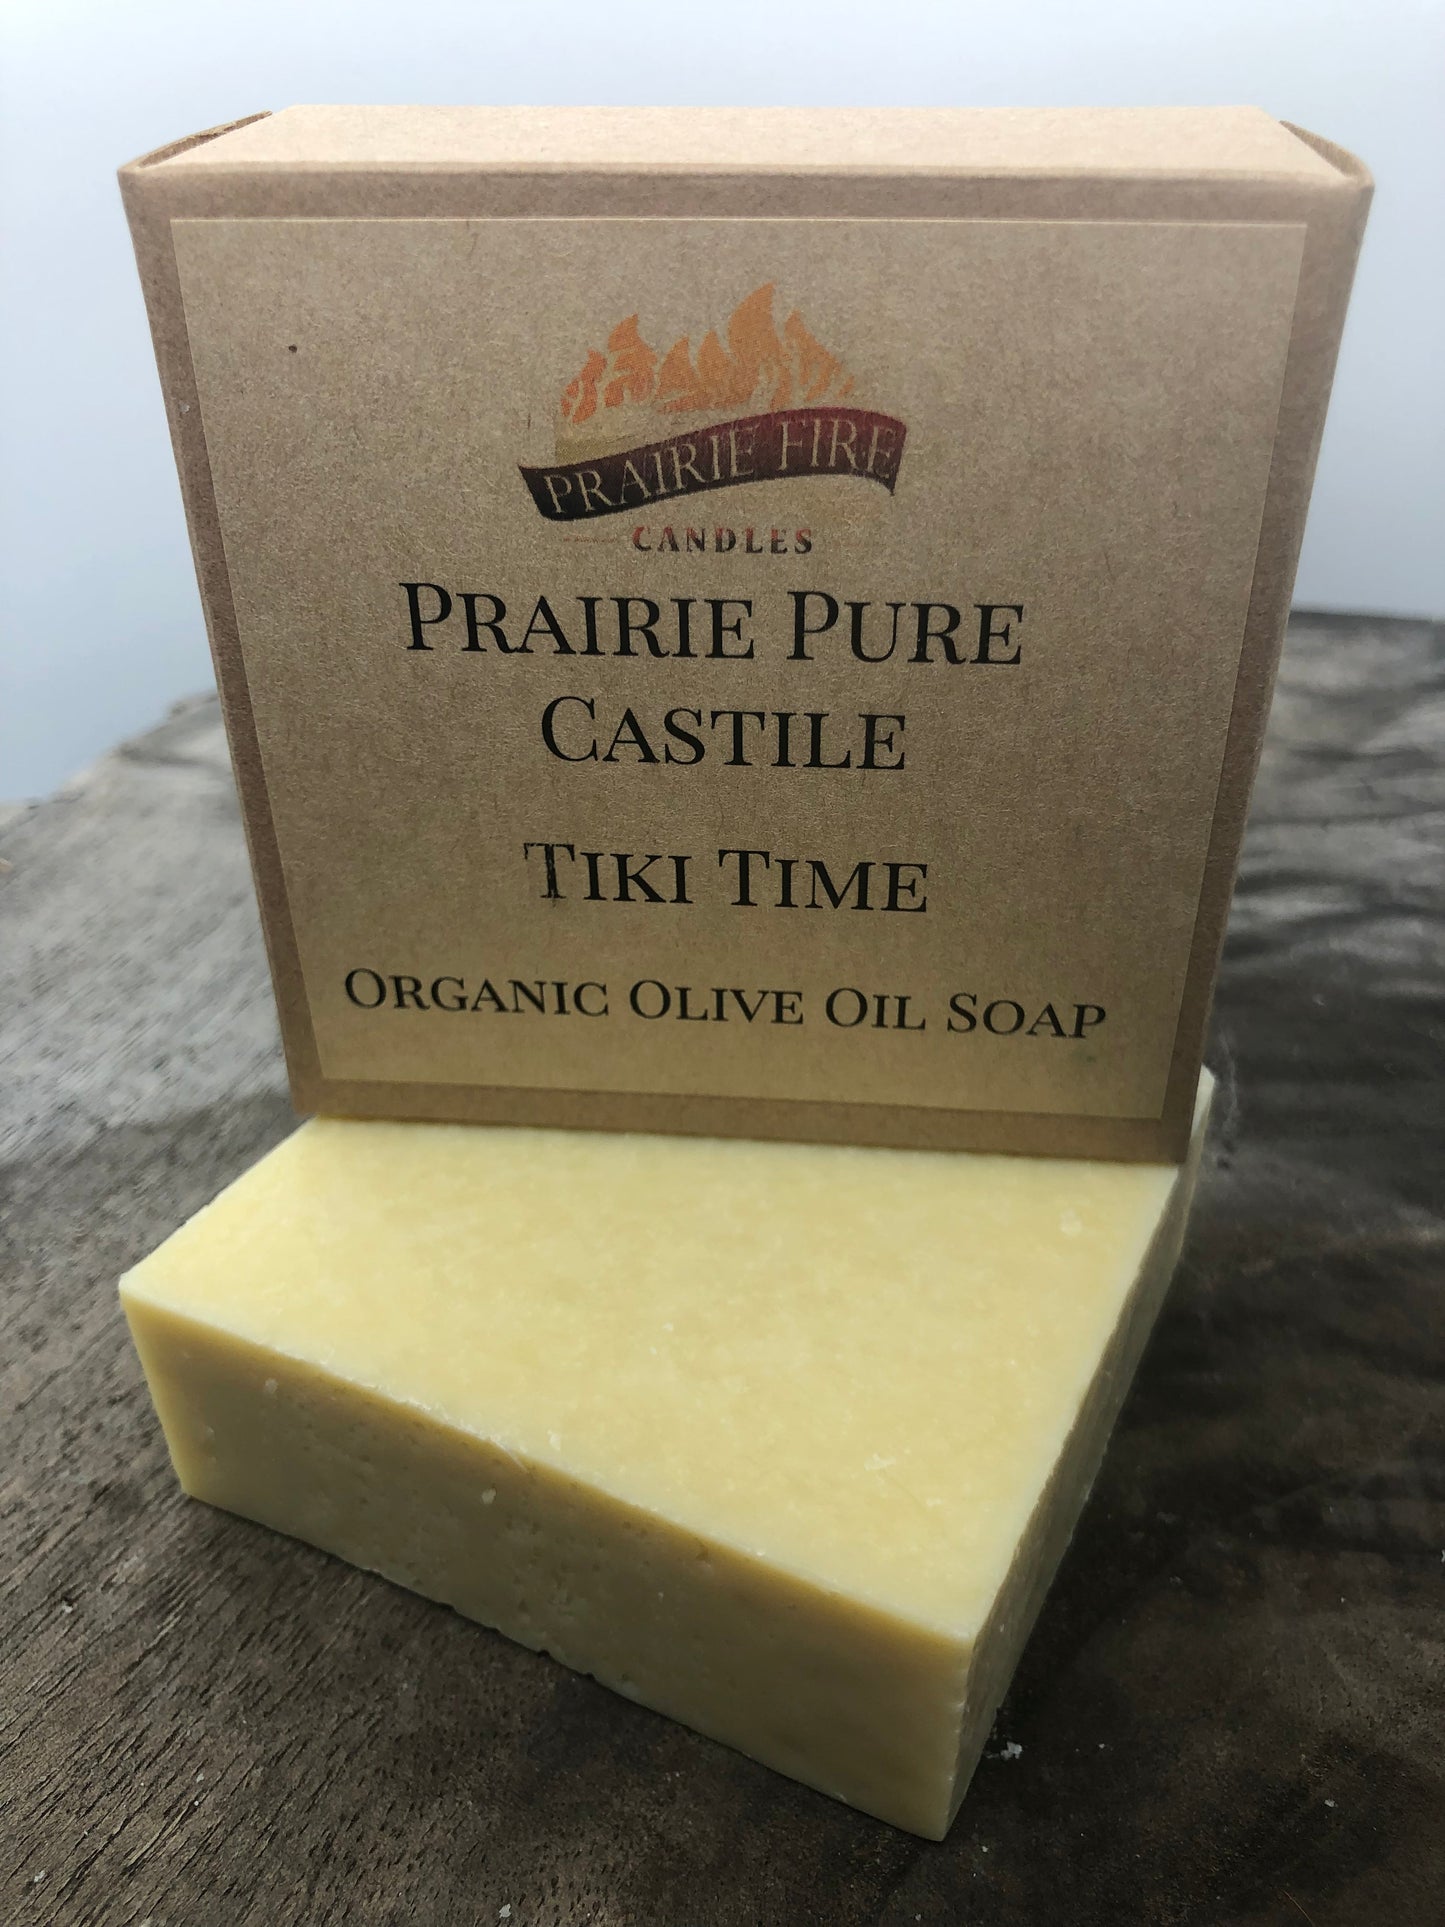 Tiki Time Real Castile Organic Olive Oil Soap for Sensitive Skin - Dye Free - 100% Certified Organic Extra Virgin Olive Oil